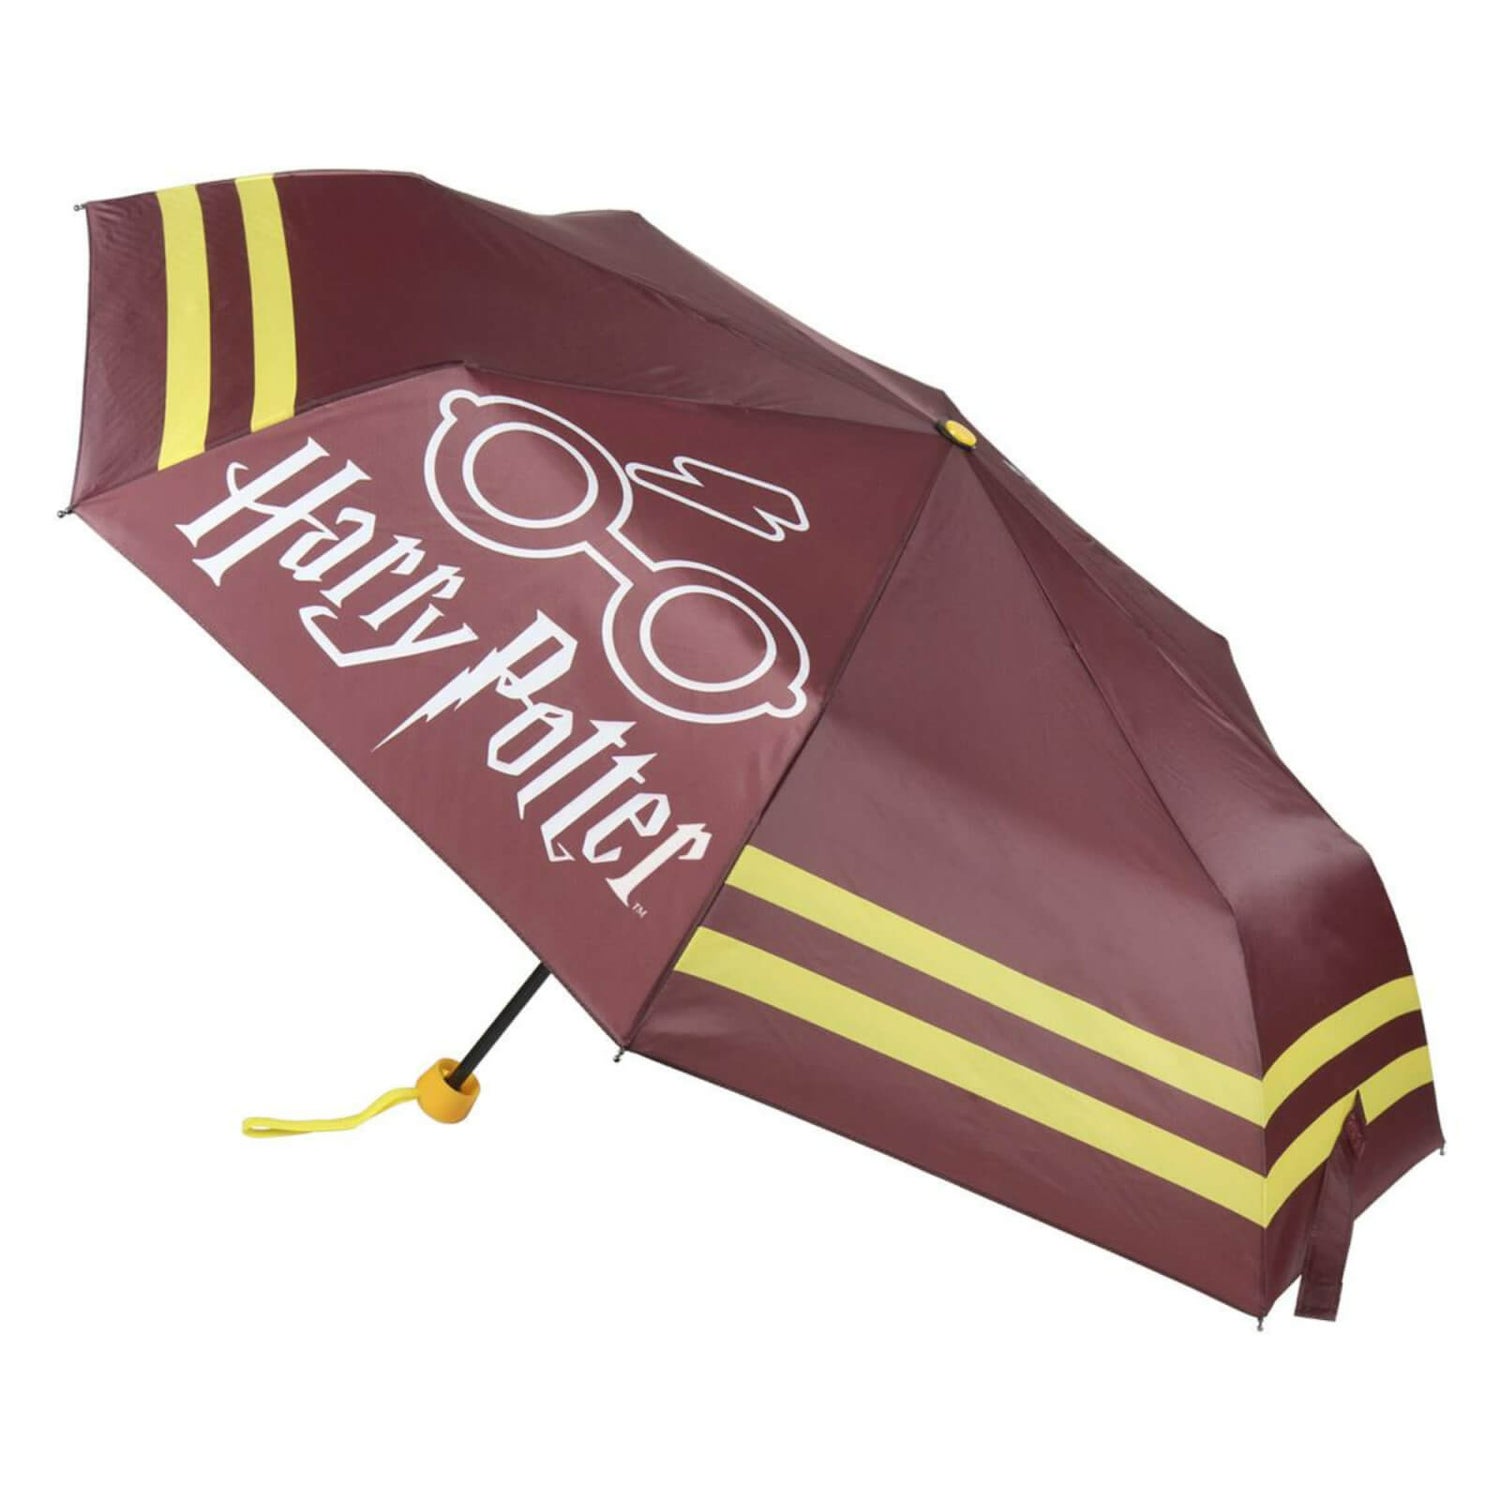 Harry Potter Glasses Umbrella - Burgundy